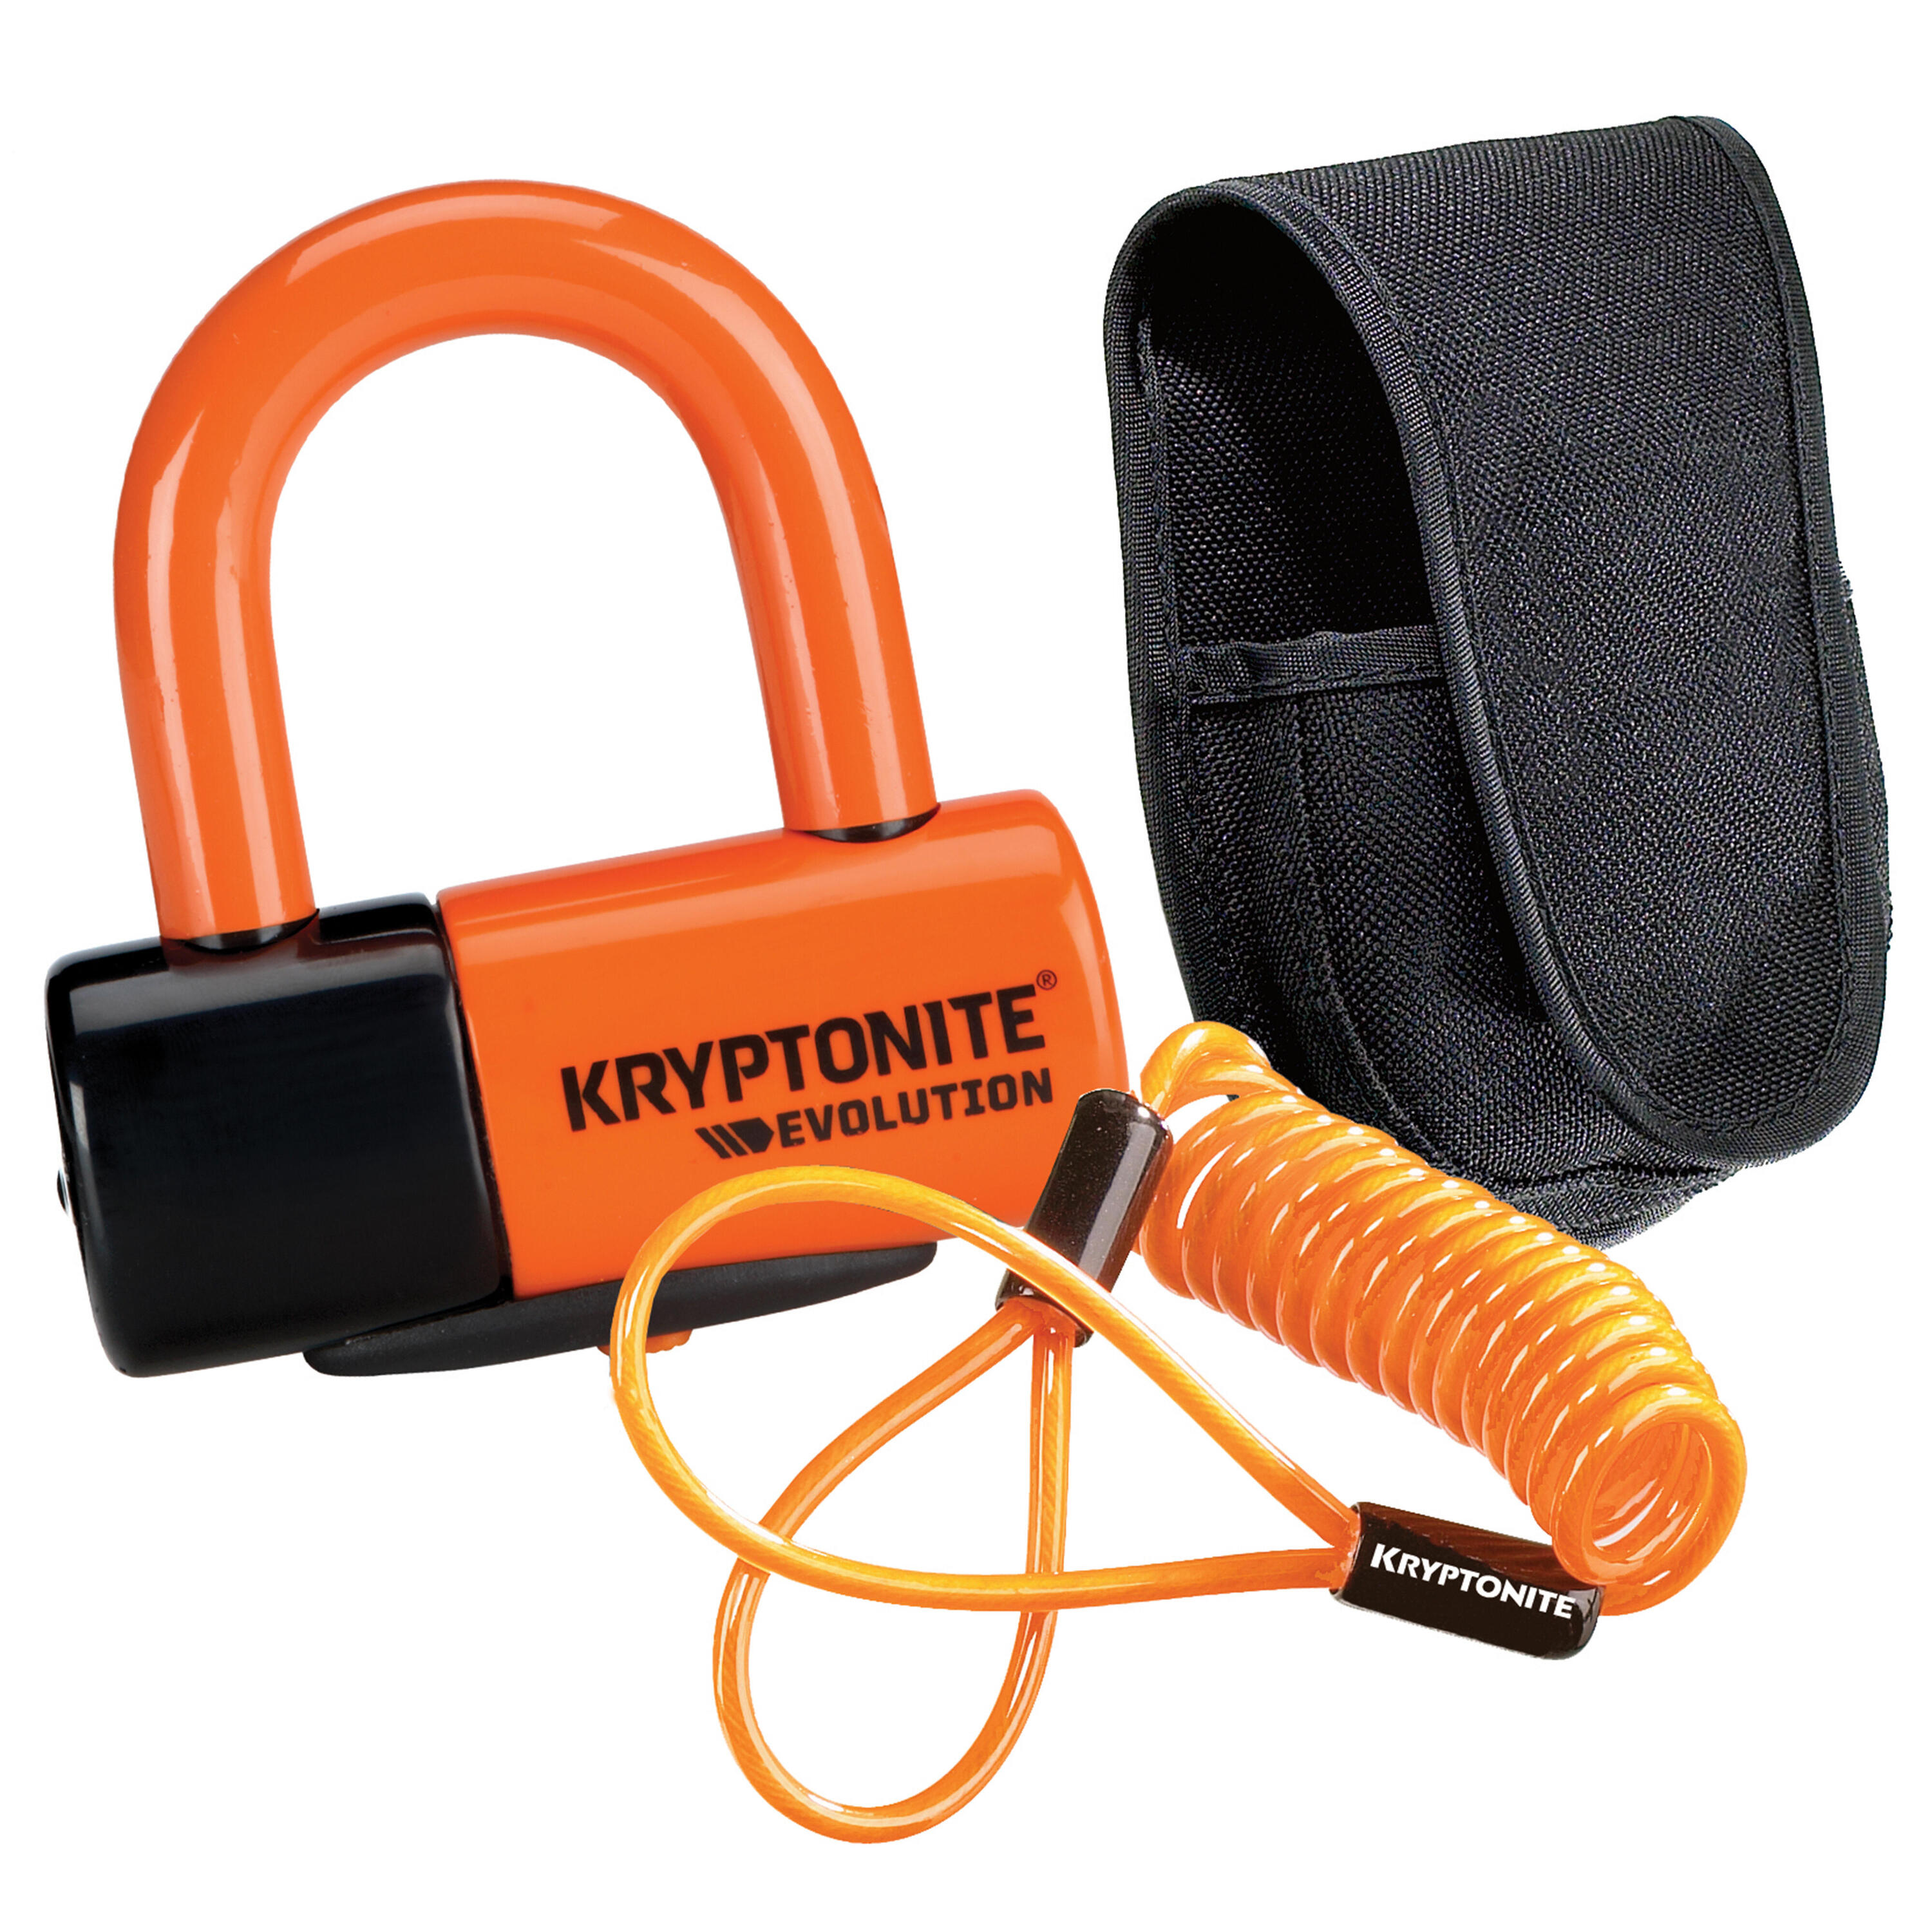 KRYPTONITE Kryptonite Evolution Disc Lock Premium Pack Orange